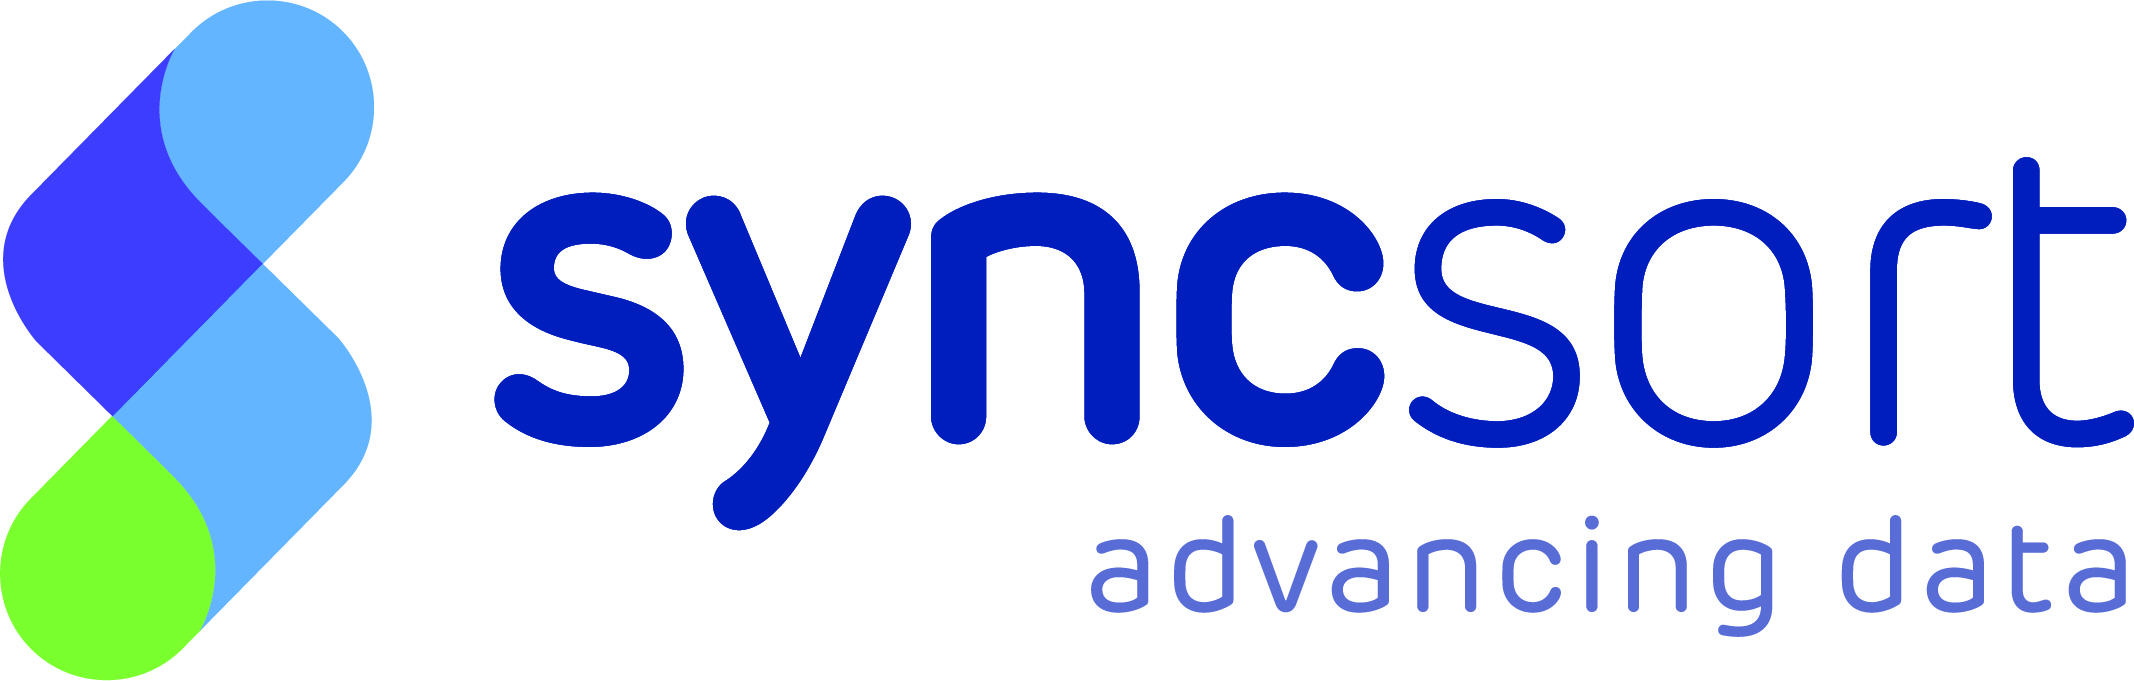 syncsort 2018 logo